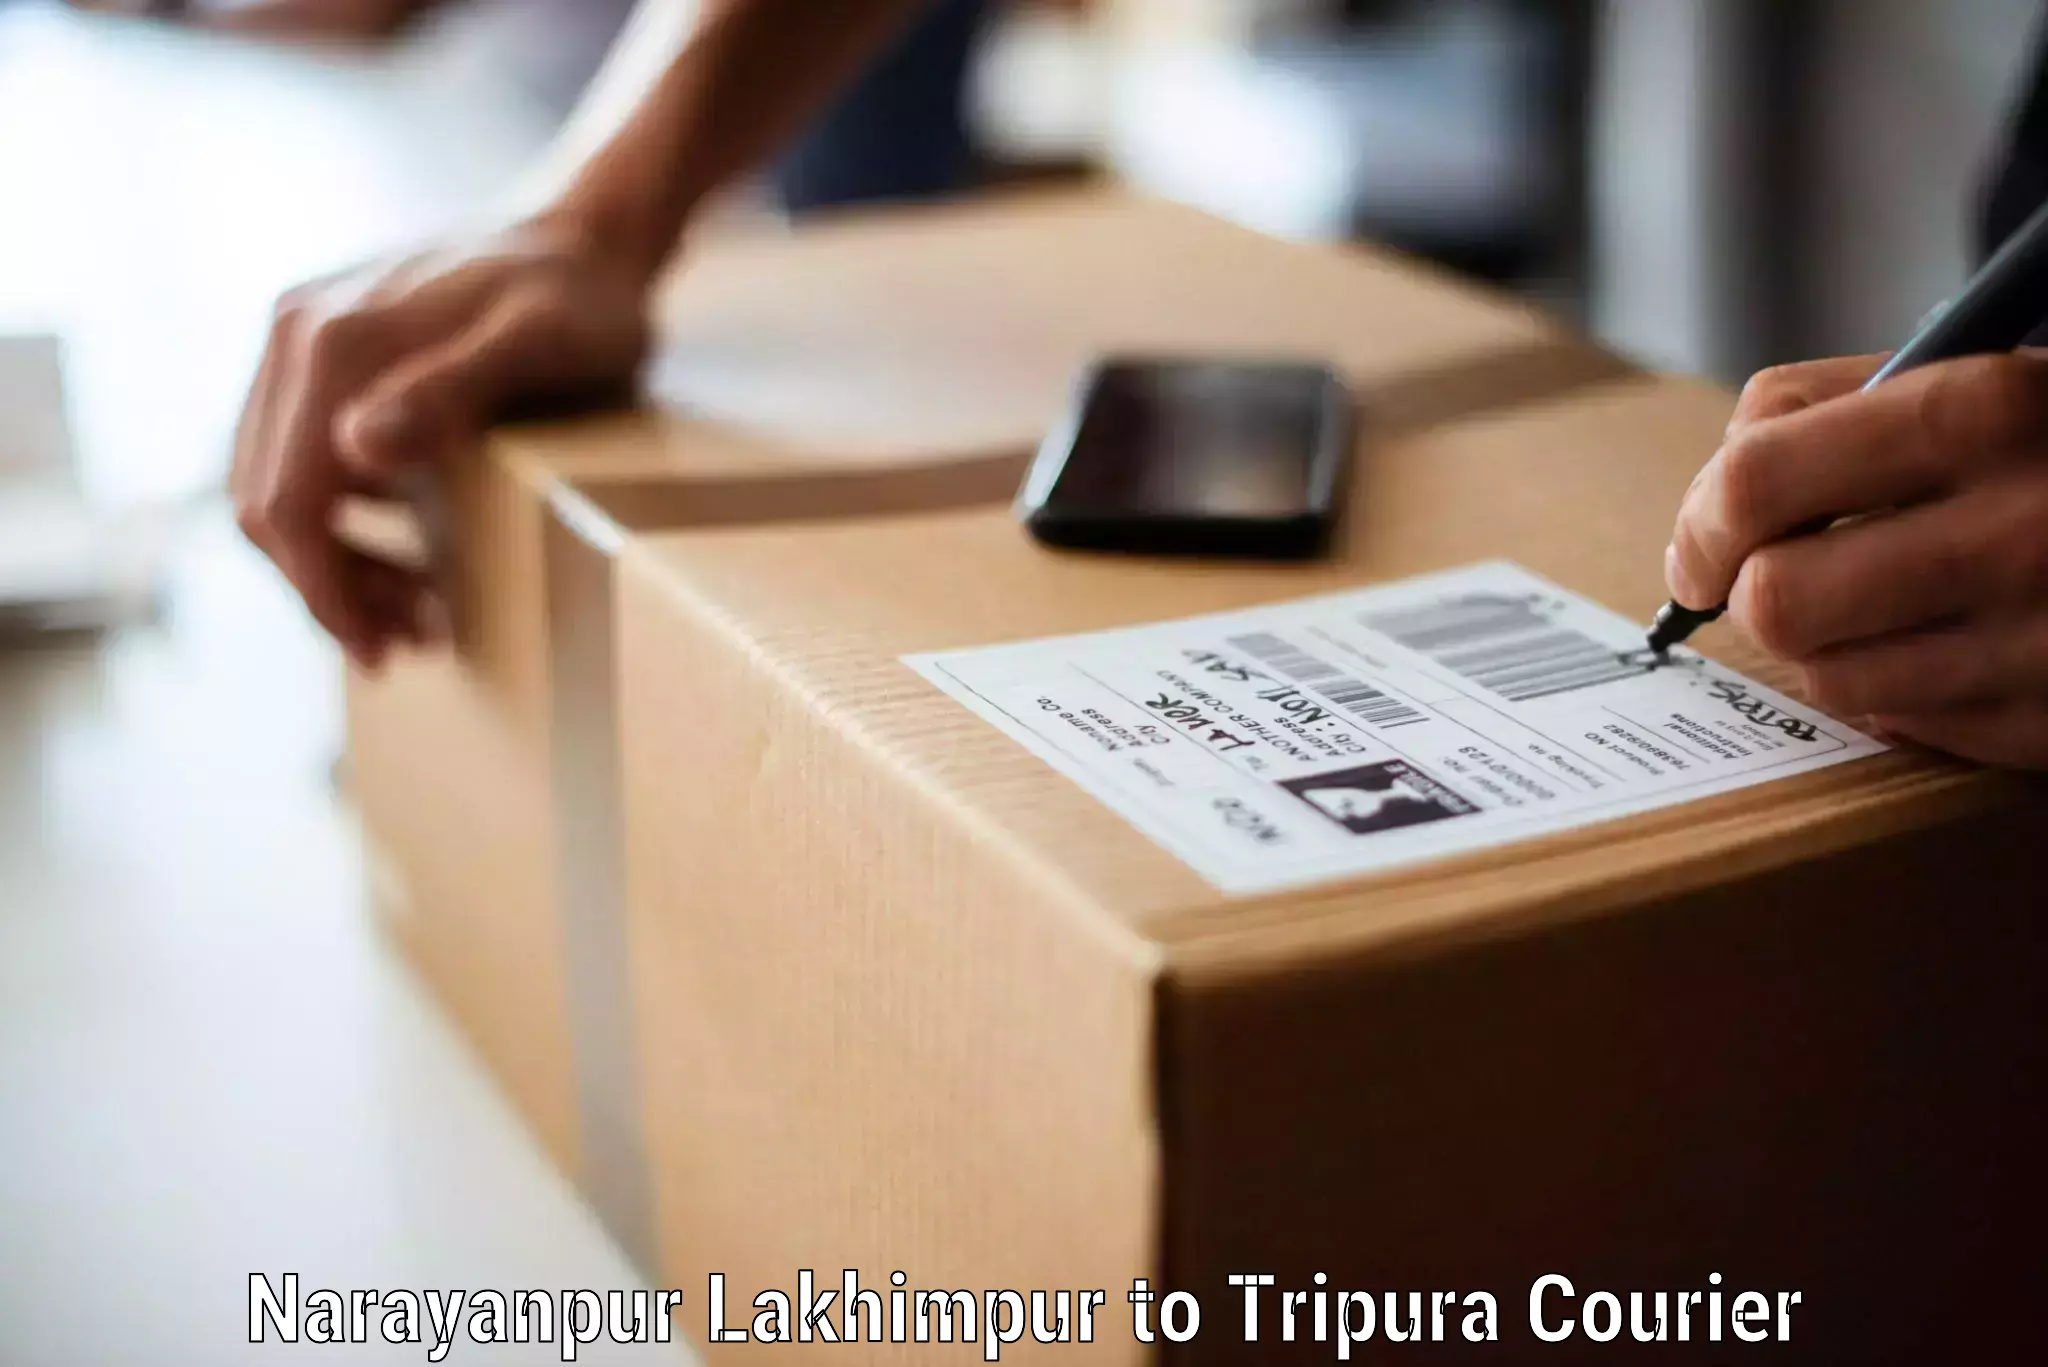 Moving and packing experts Narayanpur Lakhimpur to Tripura